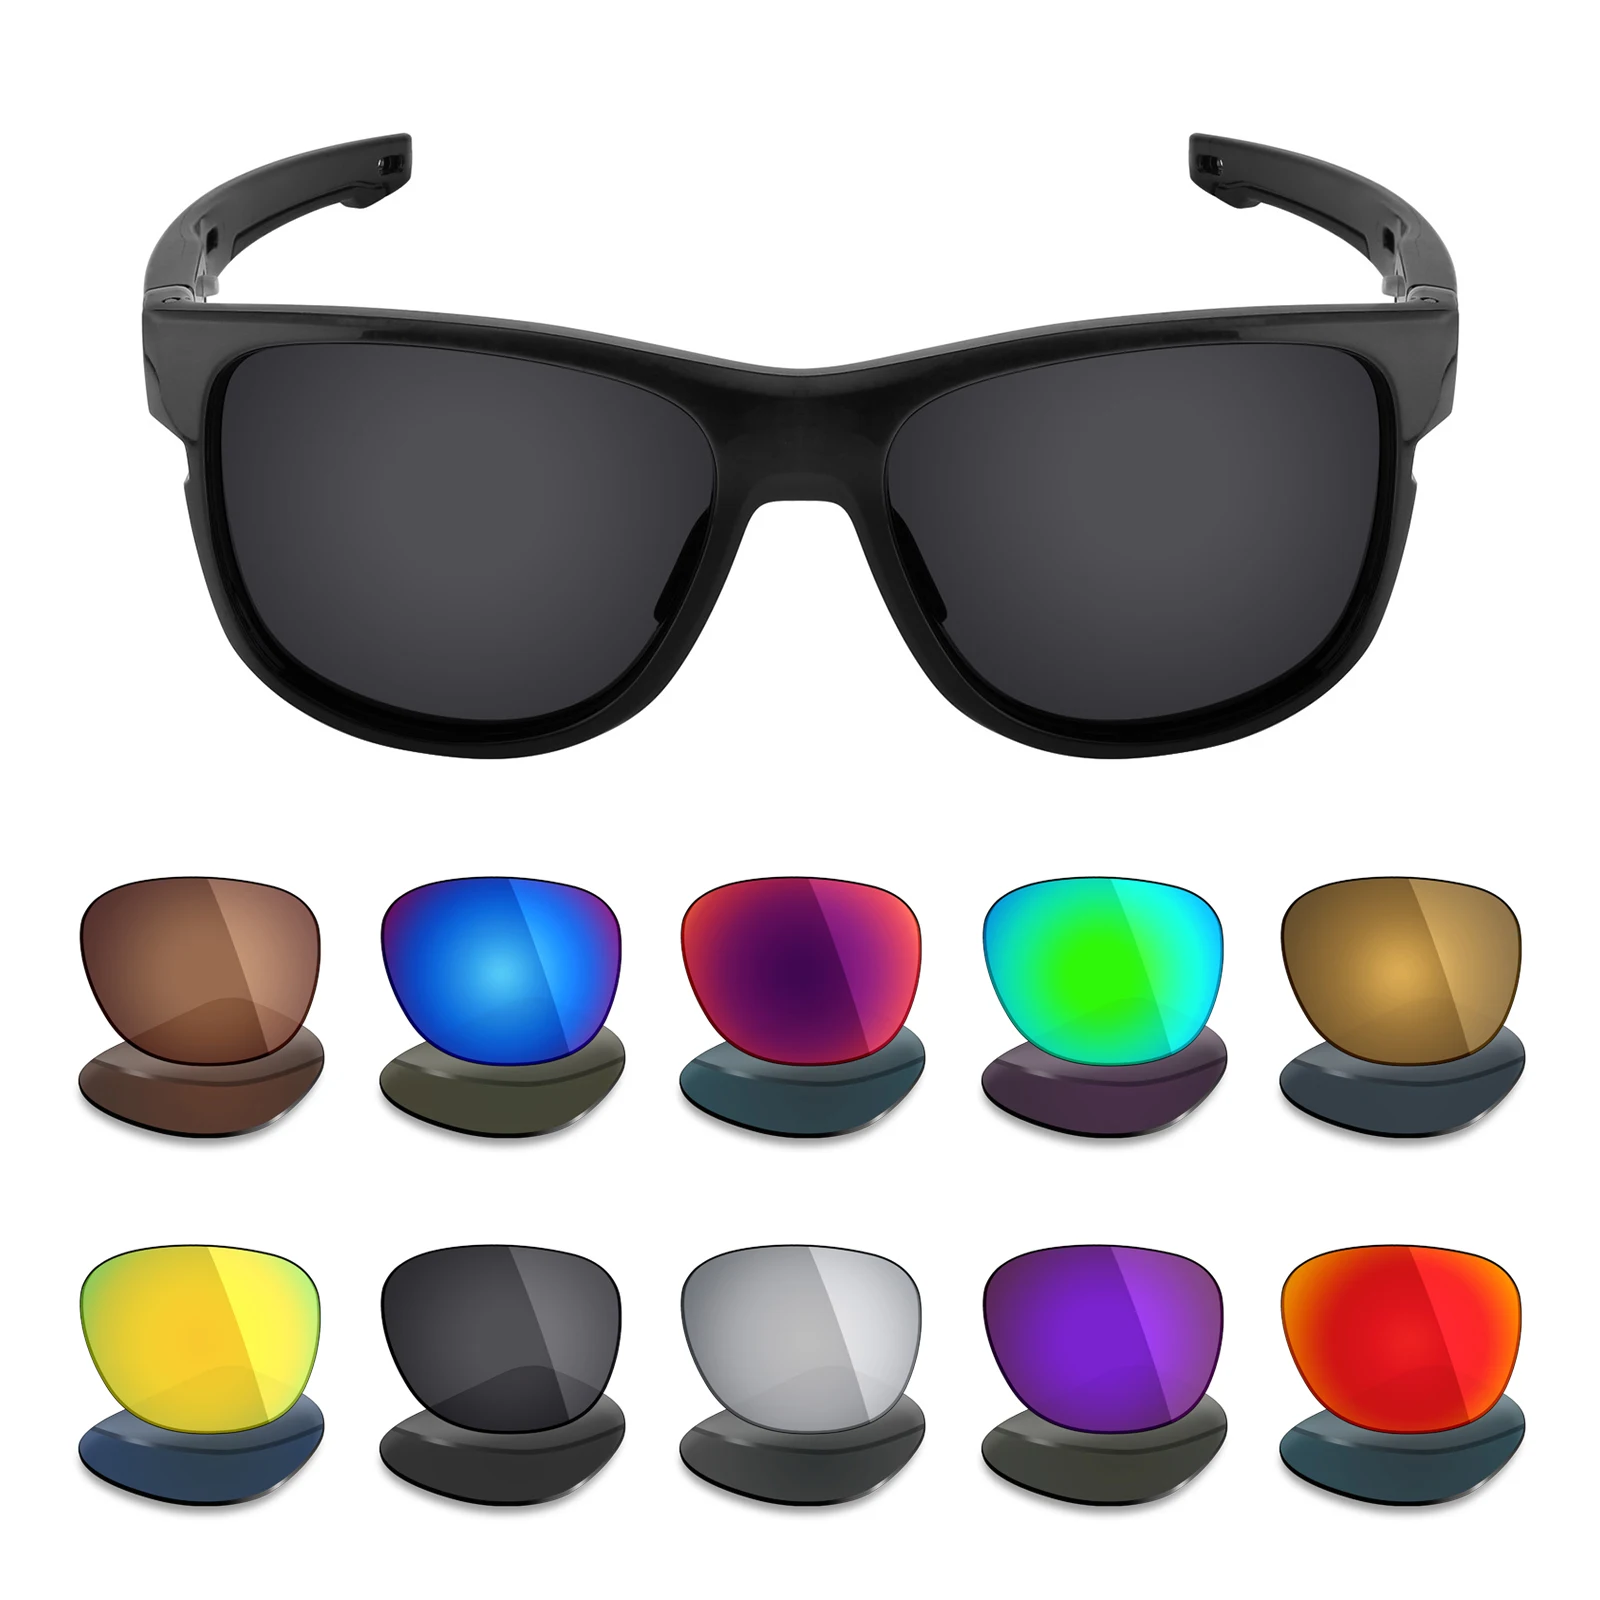 

Mryok Polarized Replacement Lenses for Oakley Crossrange R OO9359-57mm Sunglasses (Lenses Only) - Options